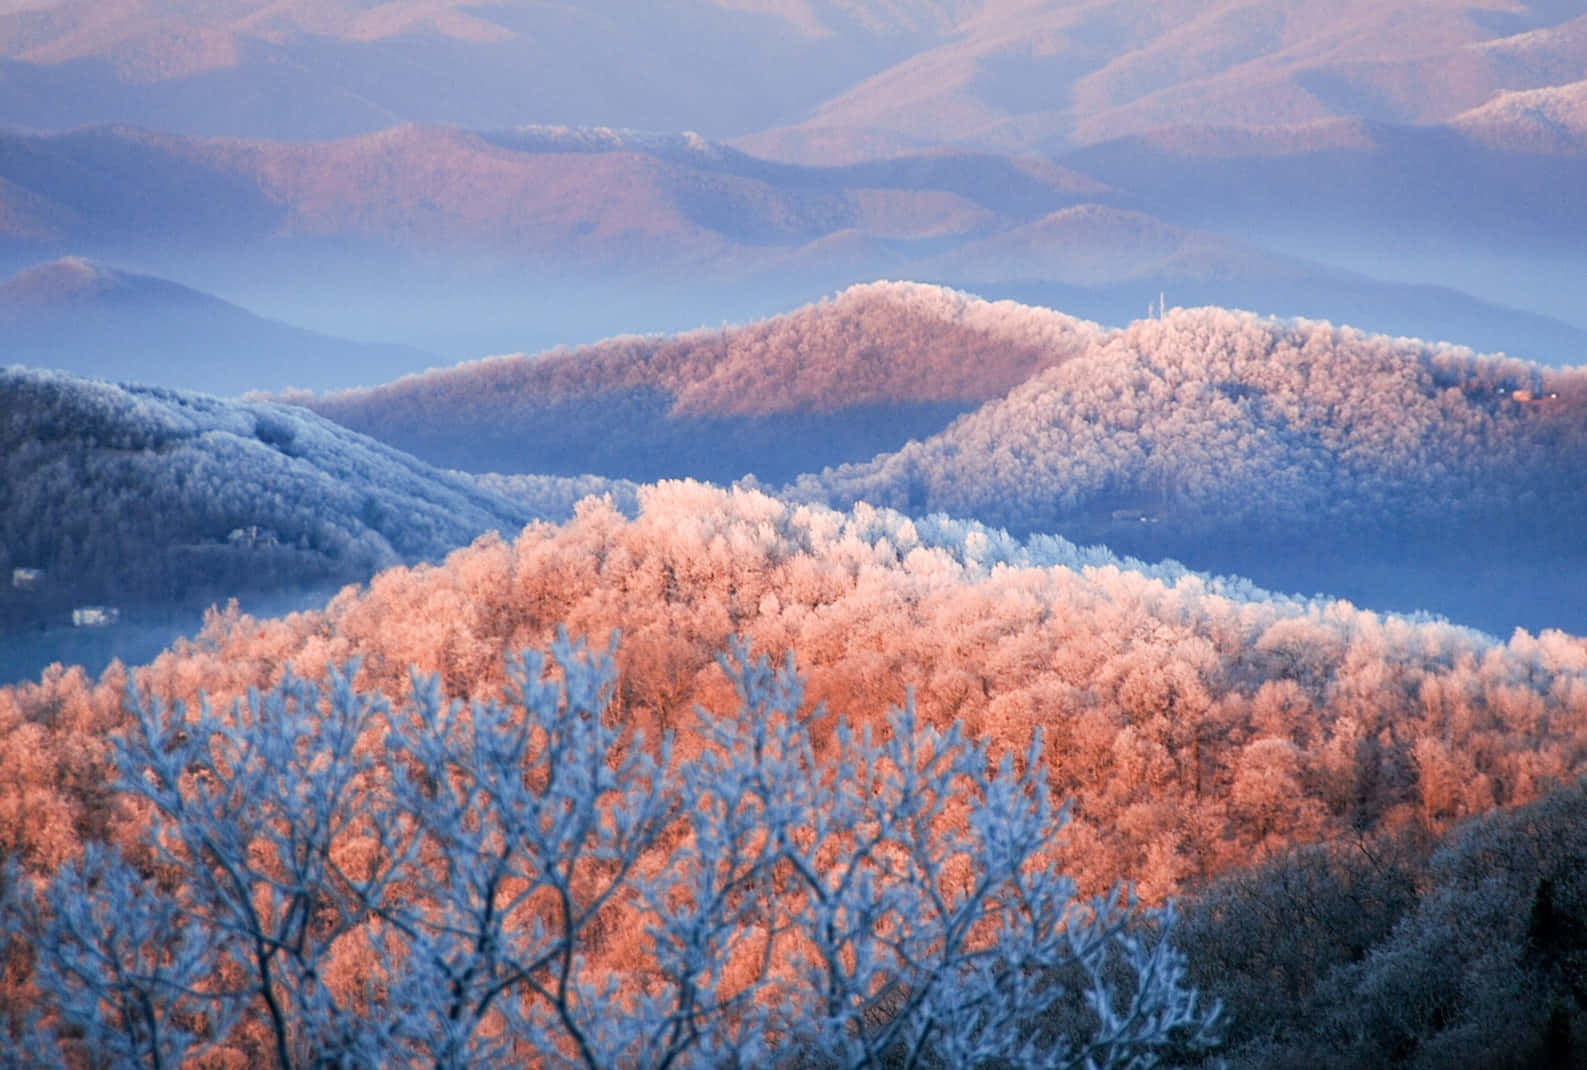 Lasprístinas Montañas Blue Ridge De Carolina Del Norte. Fondo de pantalla